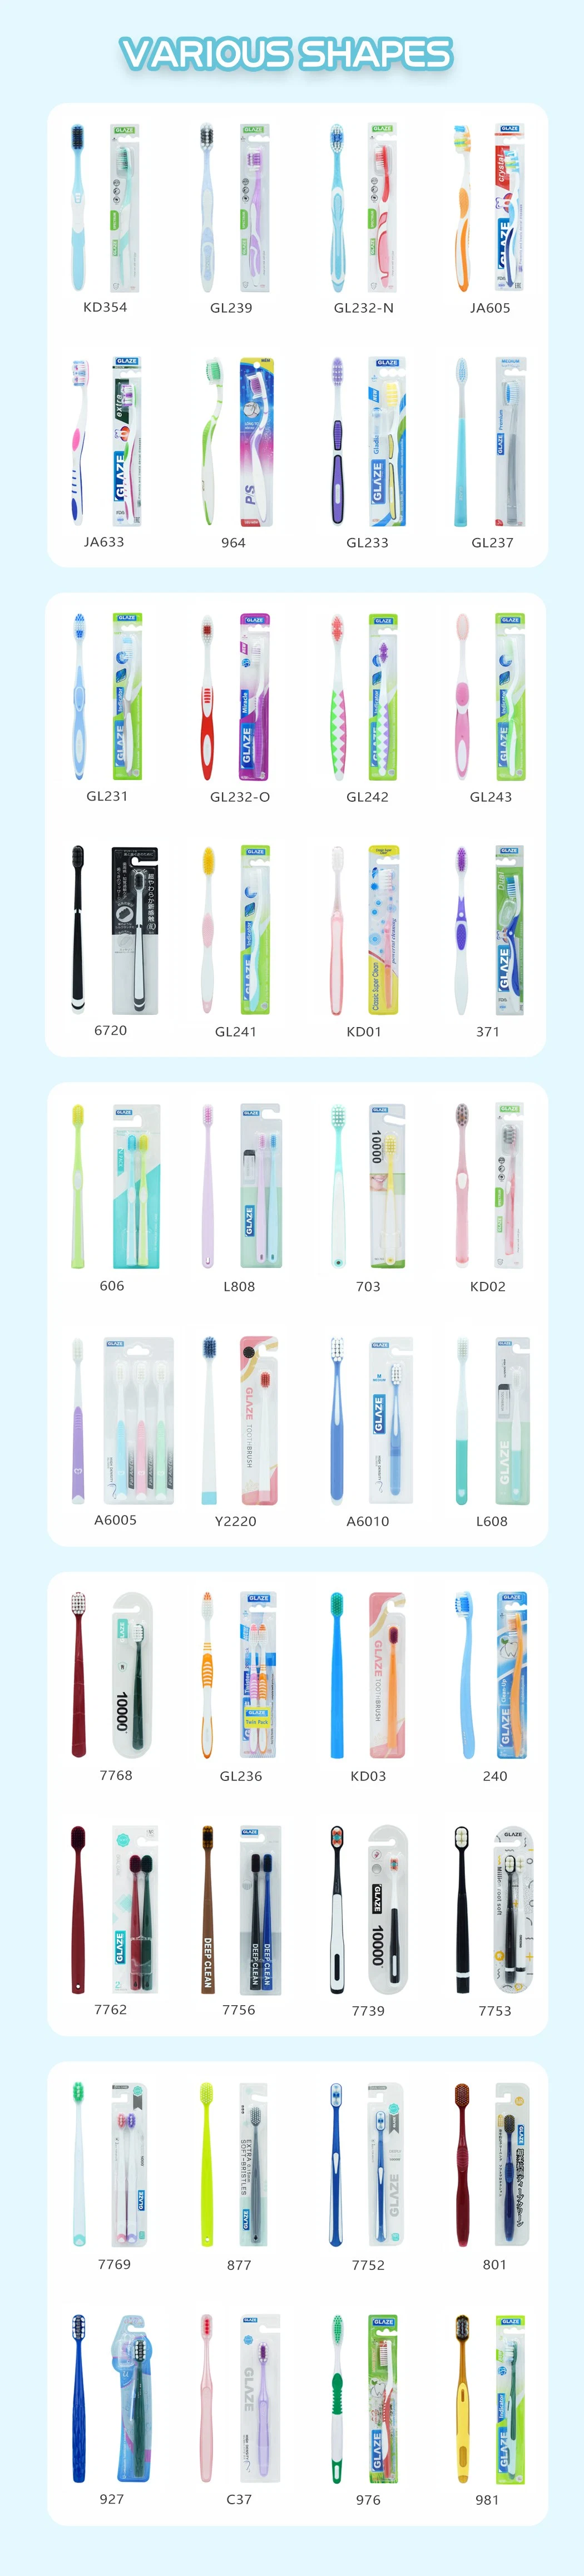 OEM Multicolour Rubber Anti Slip Handle Adult Soft Bristle Toothbrush